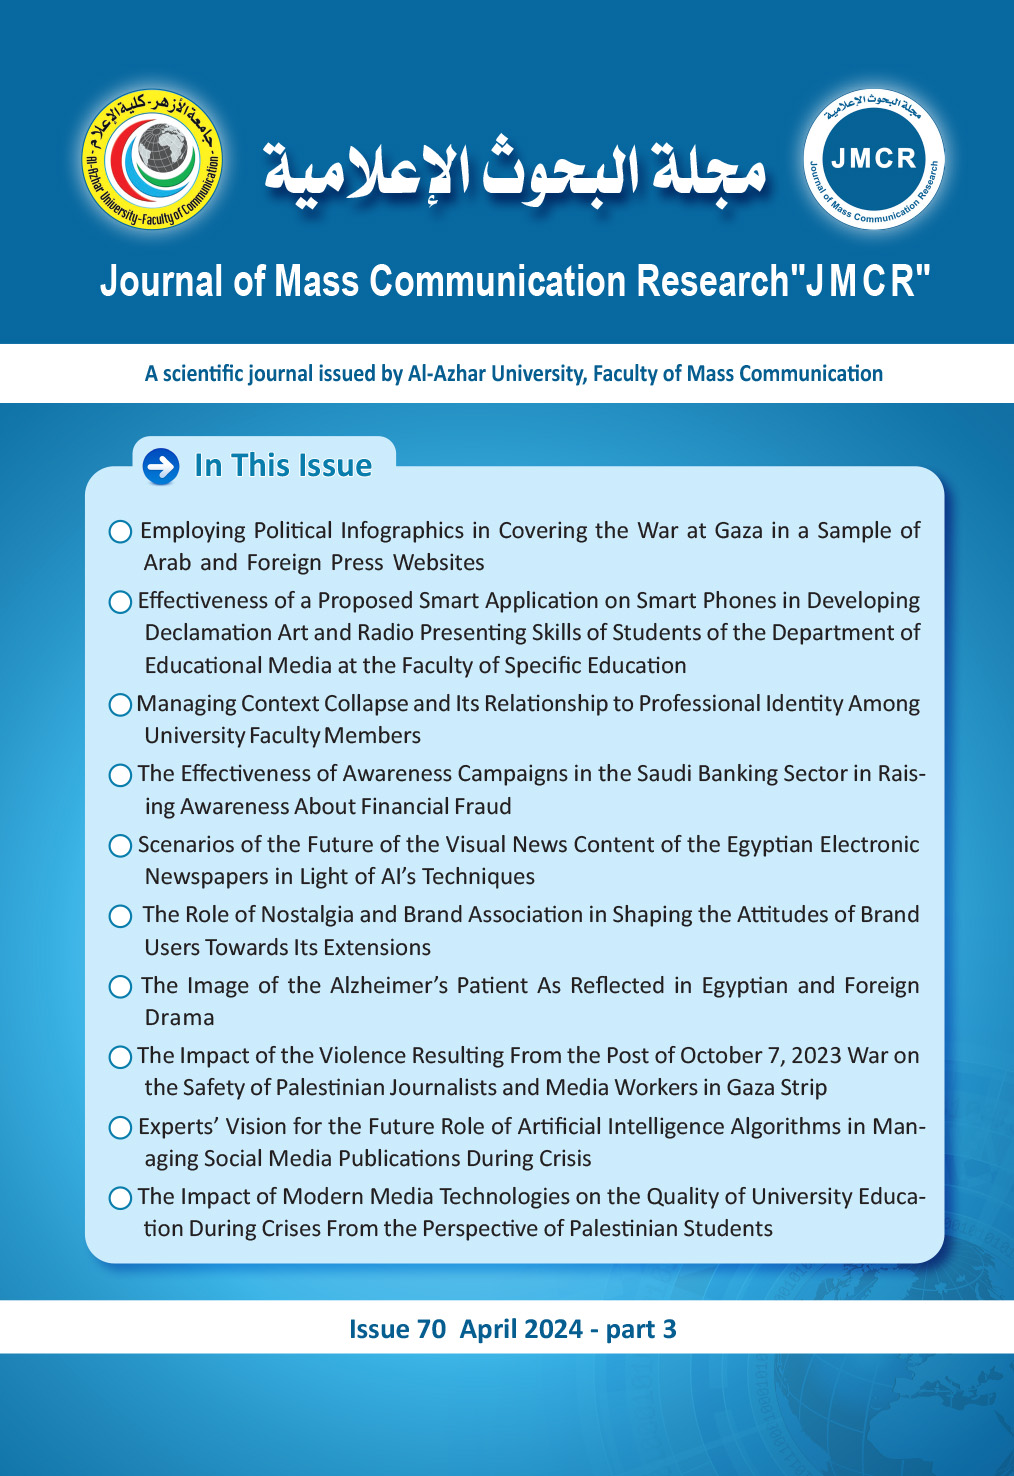 Journal of Mass Communication Research 